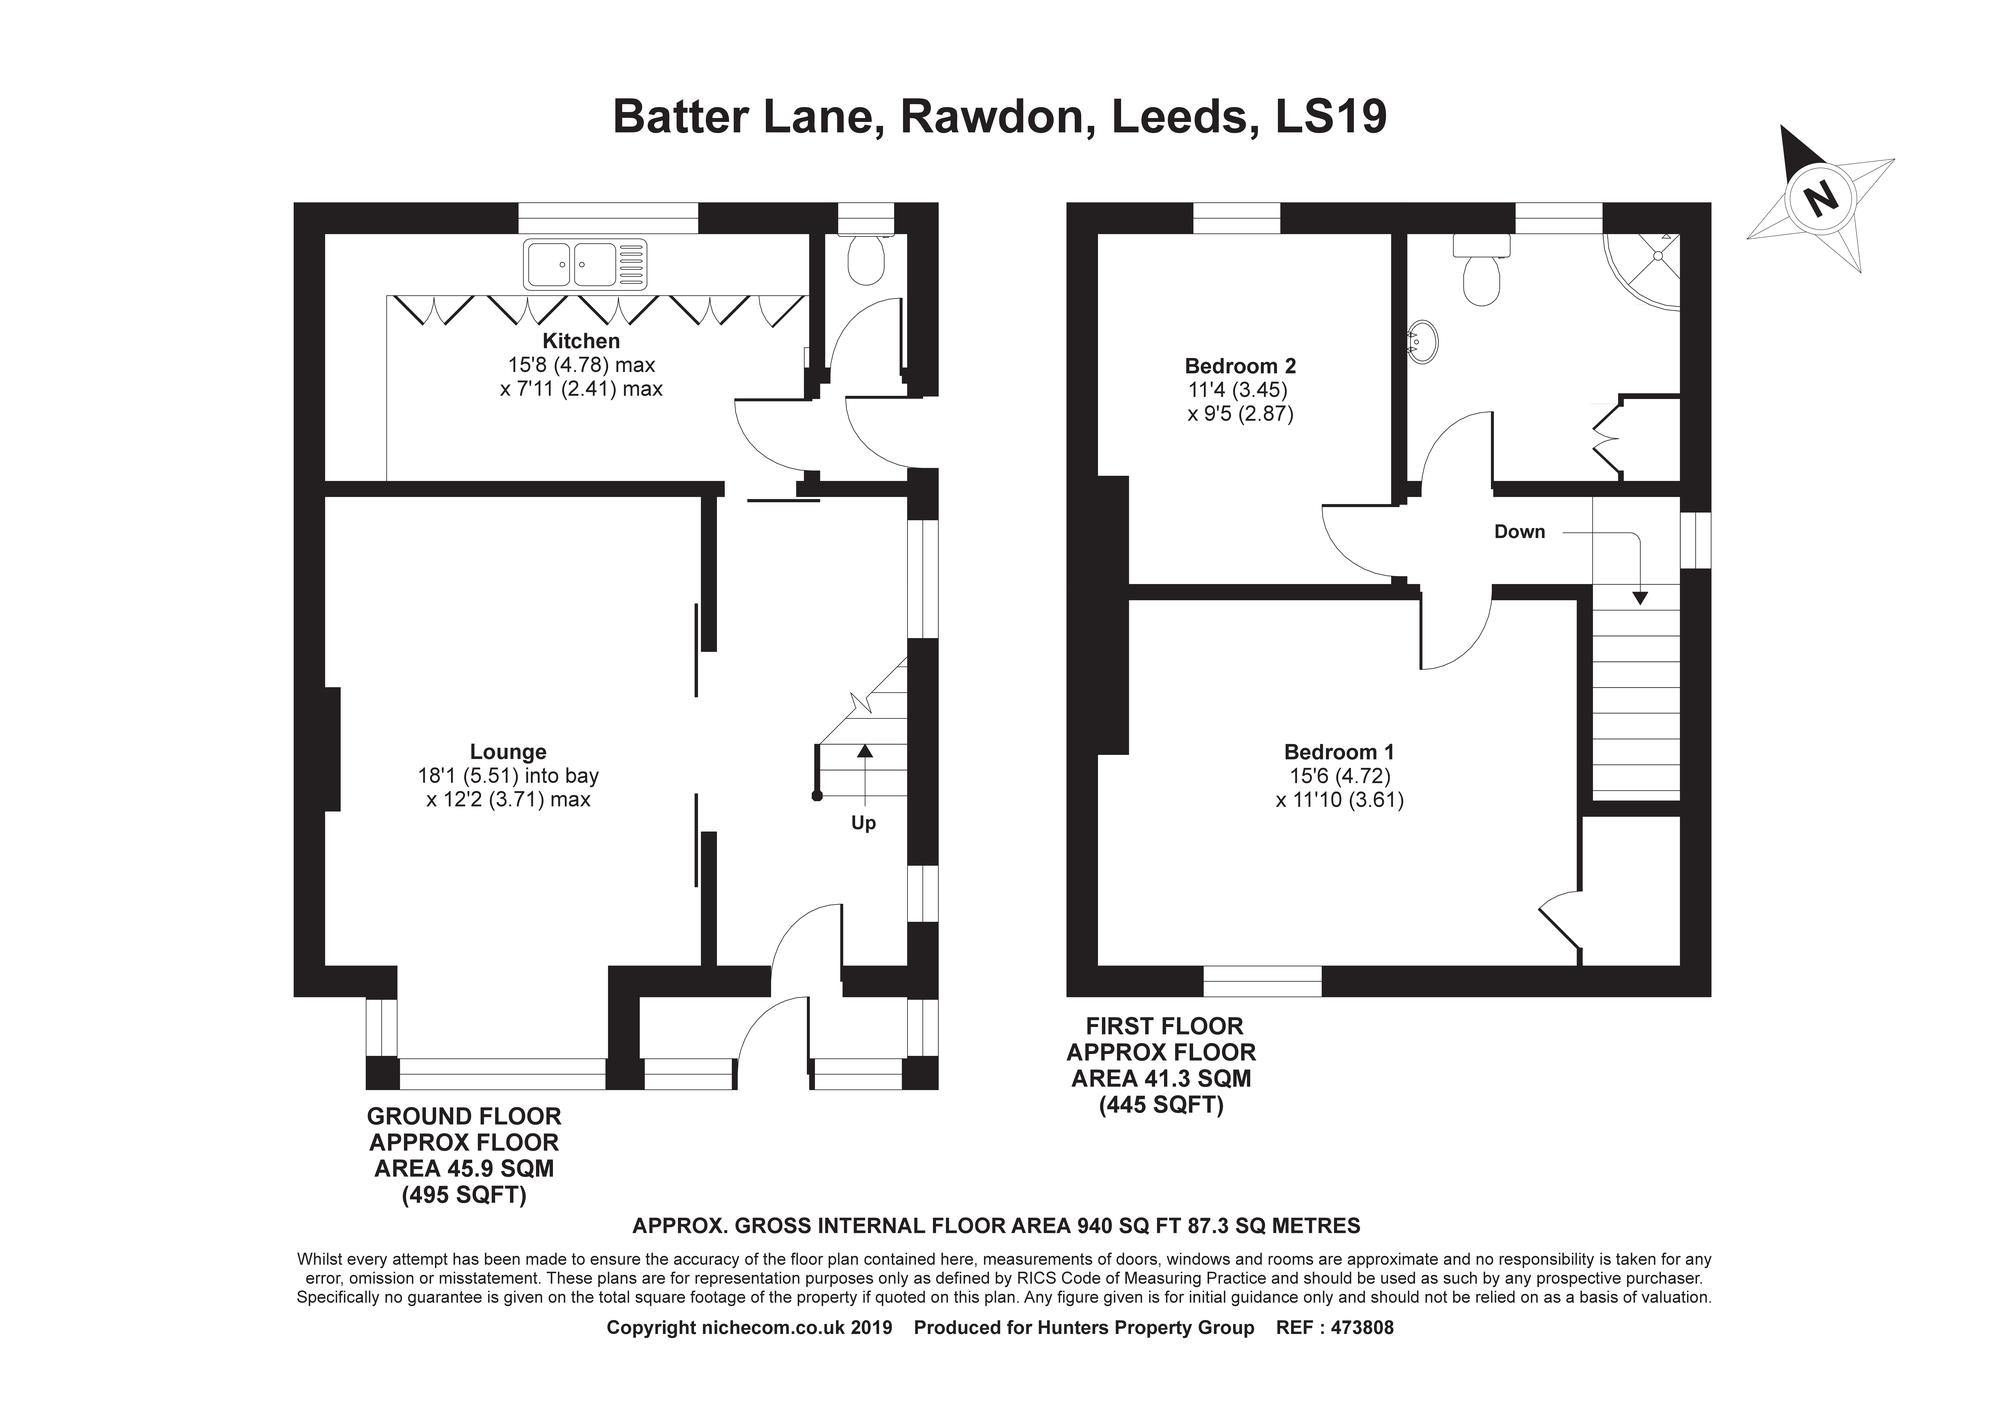 2 Bedrooms Semi-detached house for sale in Batter Lane, Rawdon, Leeds LS19